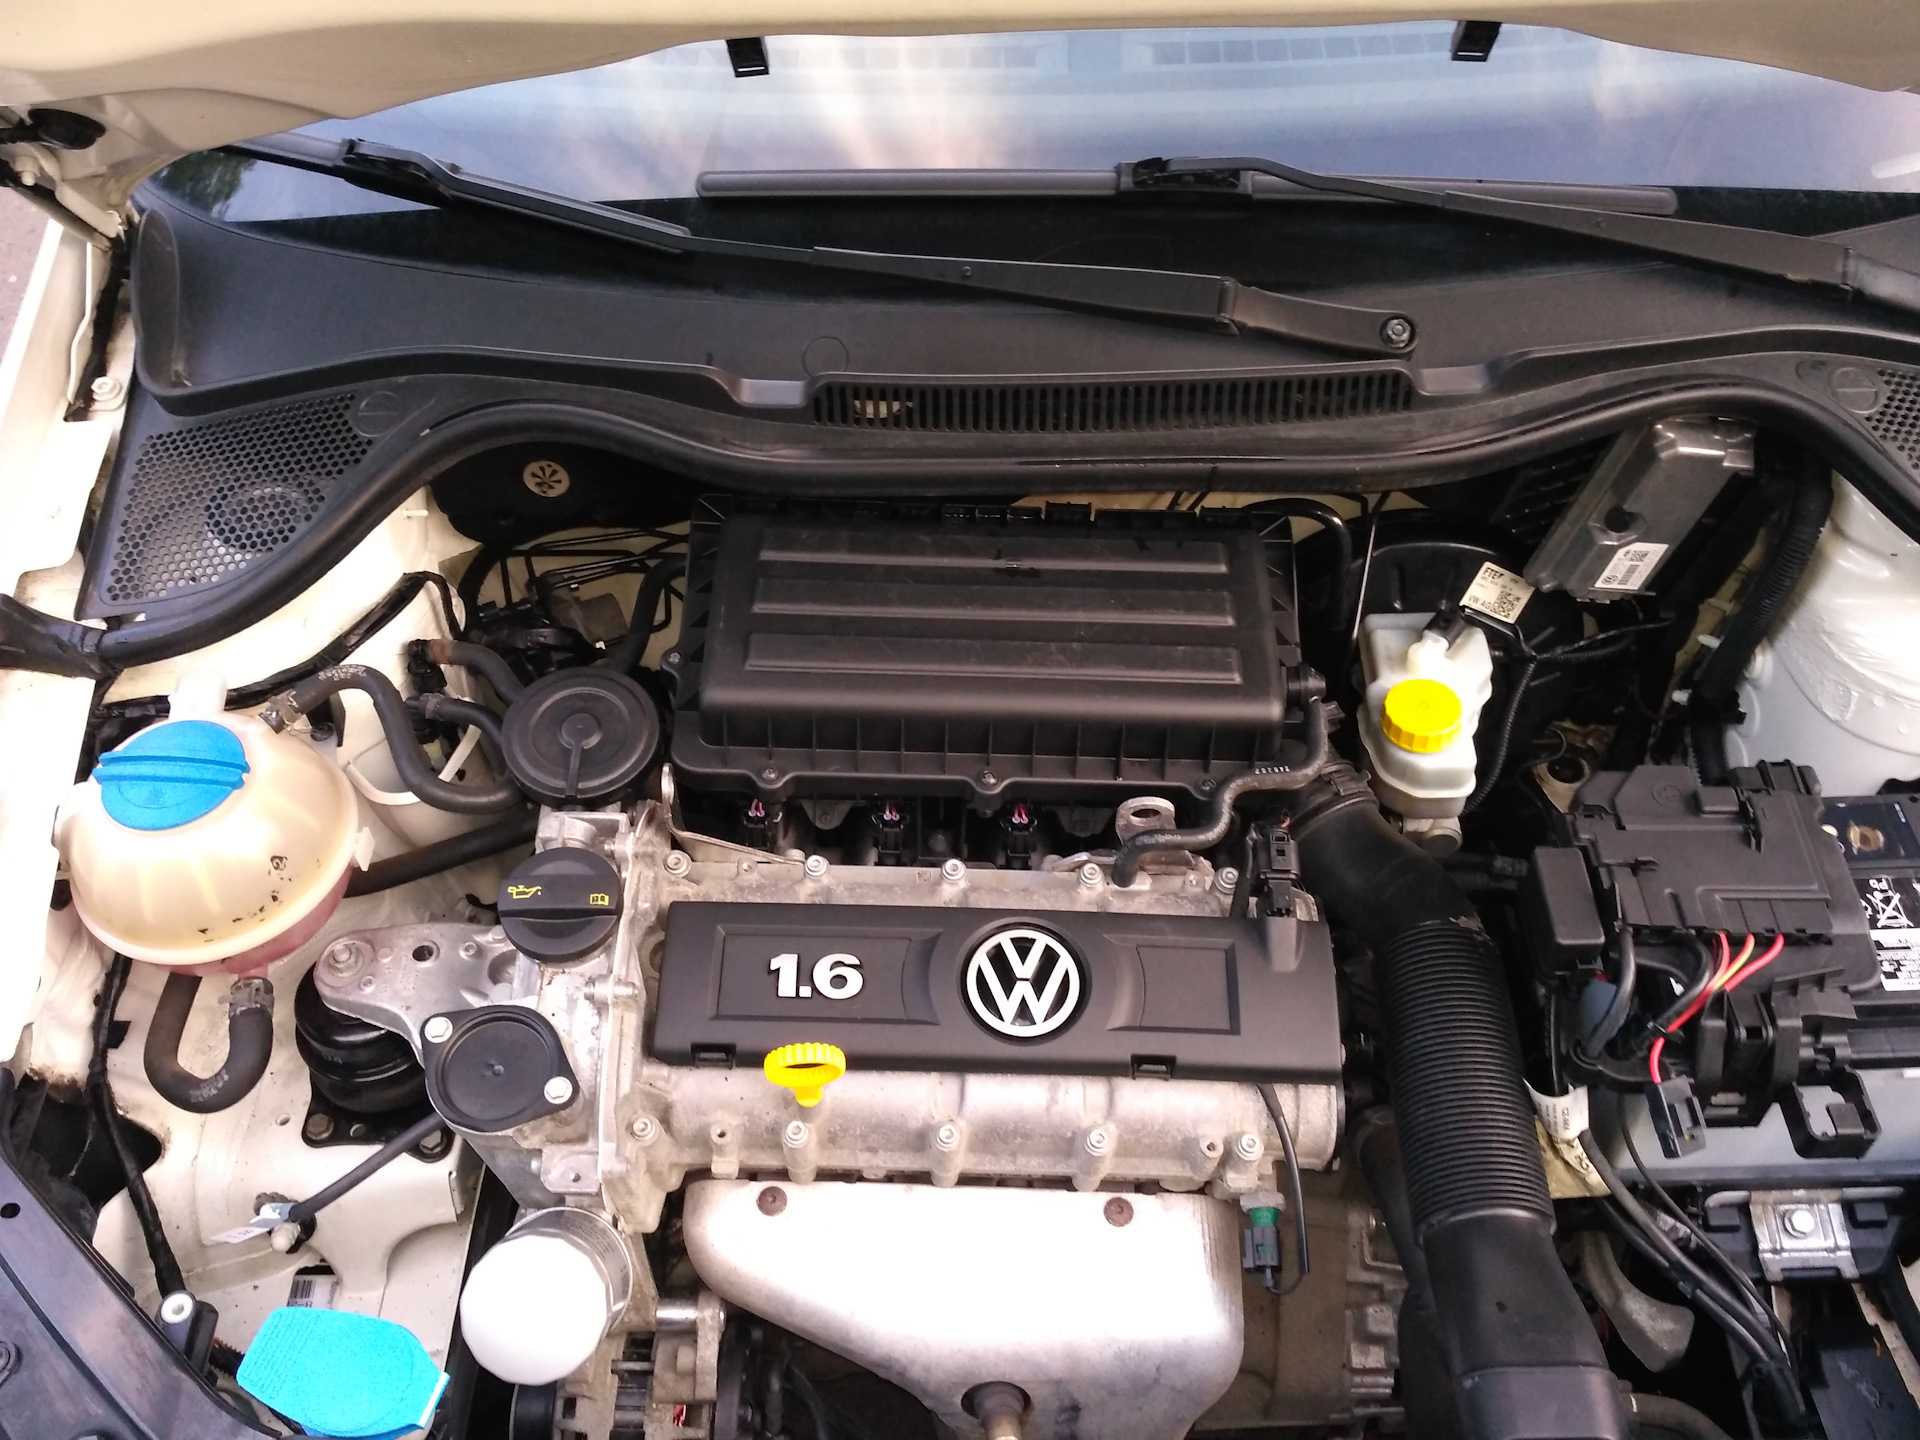 Volkswagen polo мотор. Мотор поло седан 1.6 105 л.с. Фольксваген поло ДВС 1.6. Двигатель Volkswagen Polo sedan 1.6. Двигатель поло седан 1.6 105.